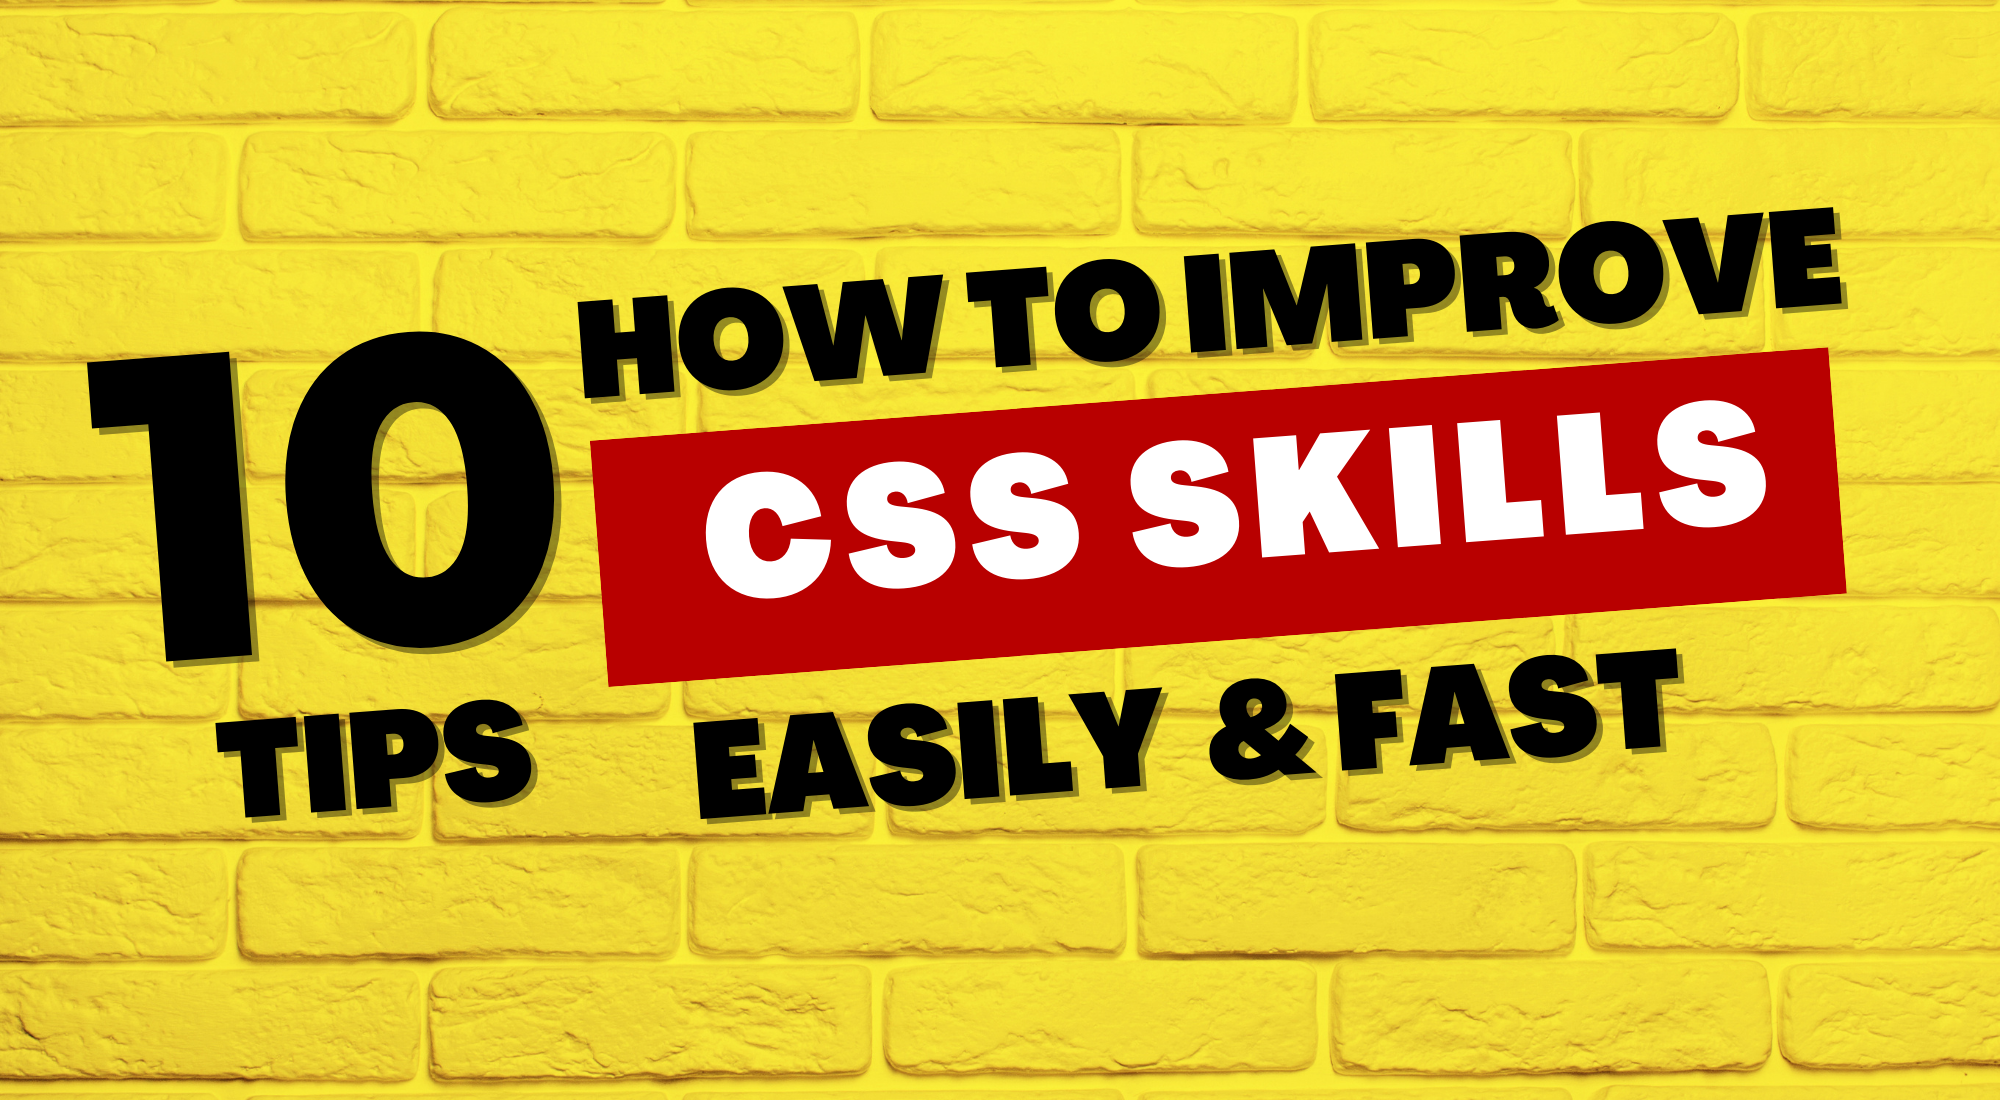 Improve CSS Skills Fast & Easy